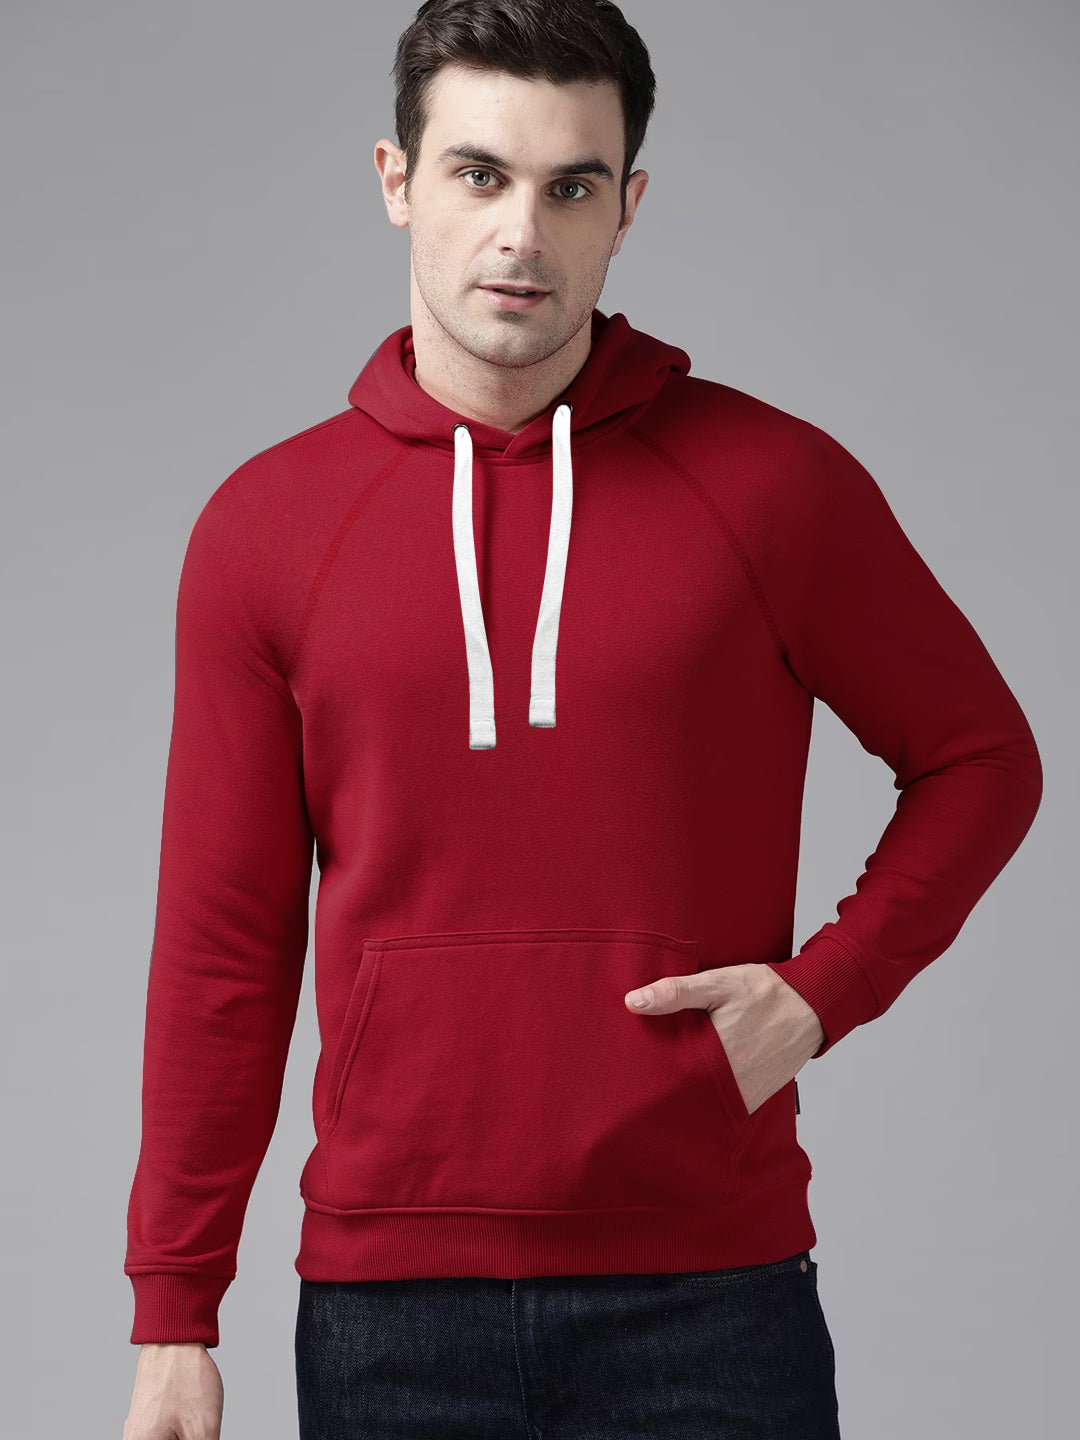 Men Hoodie & Sweat Shirts In Pakistan - BrandsEgo